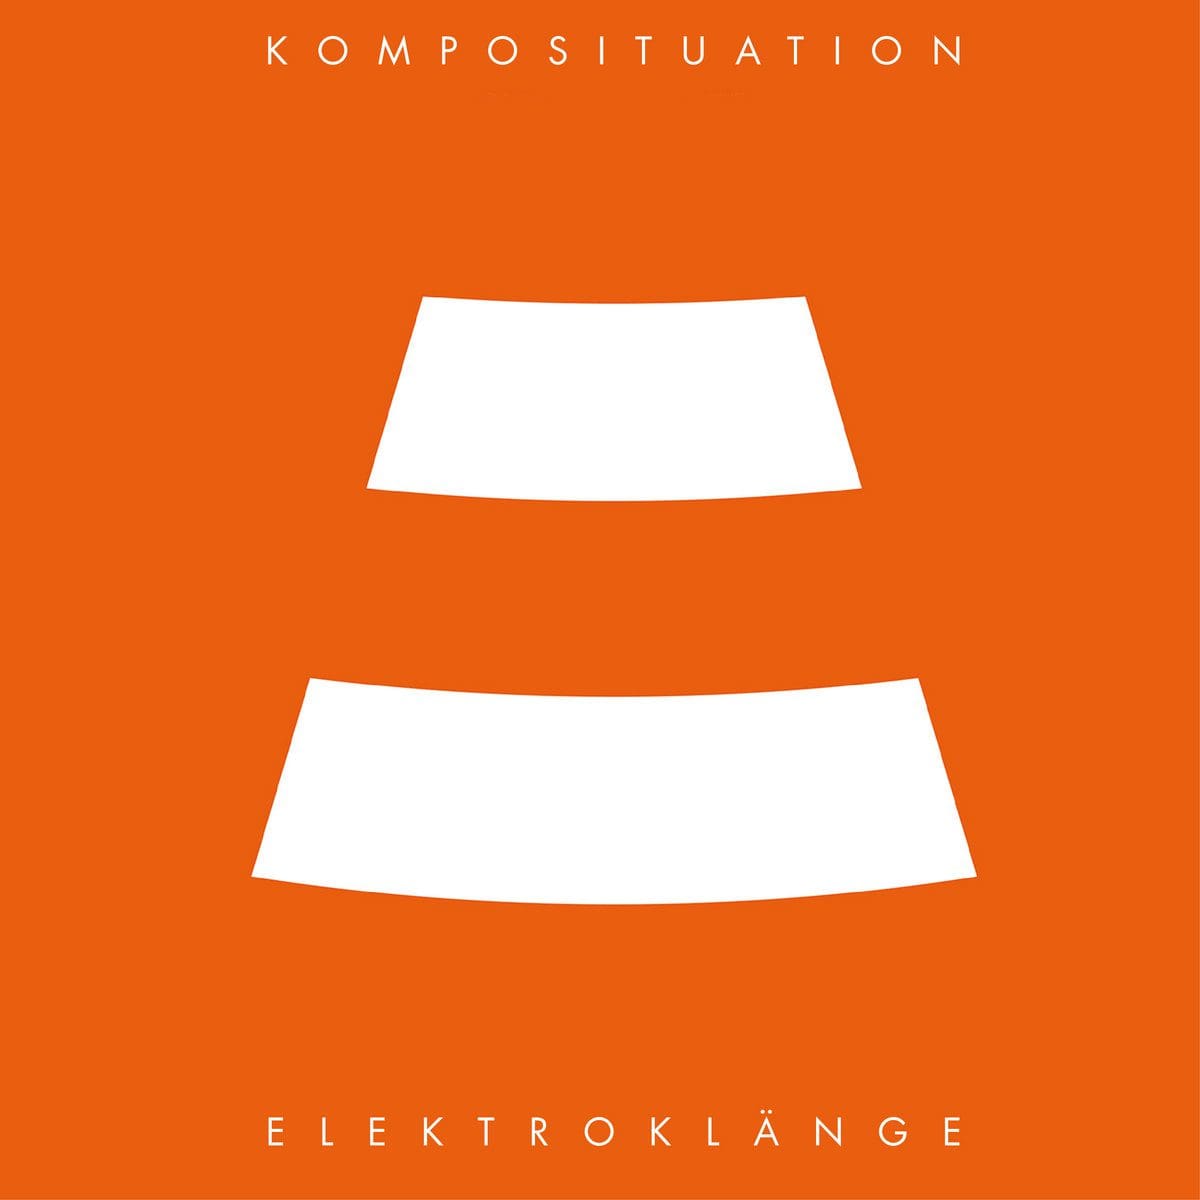 Swedish minimalistic electro pop act Elektroklänge presents debut album Komposituation